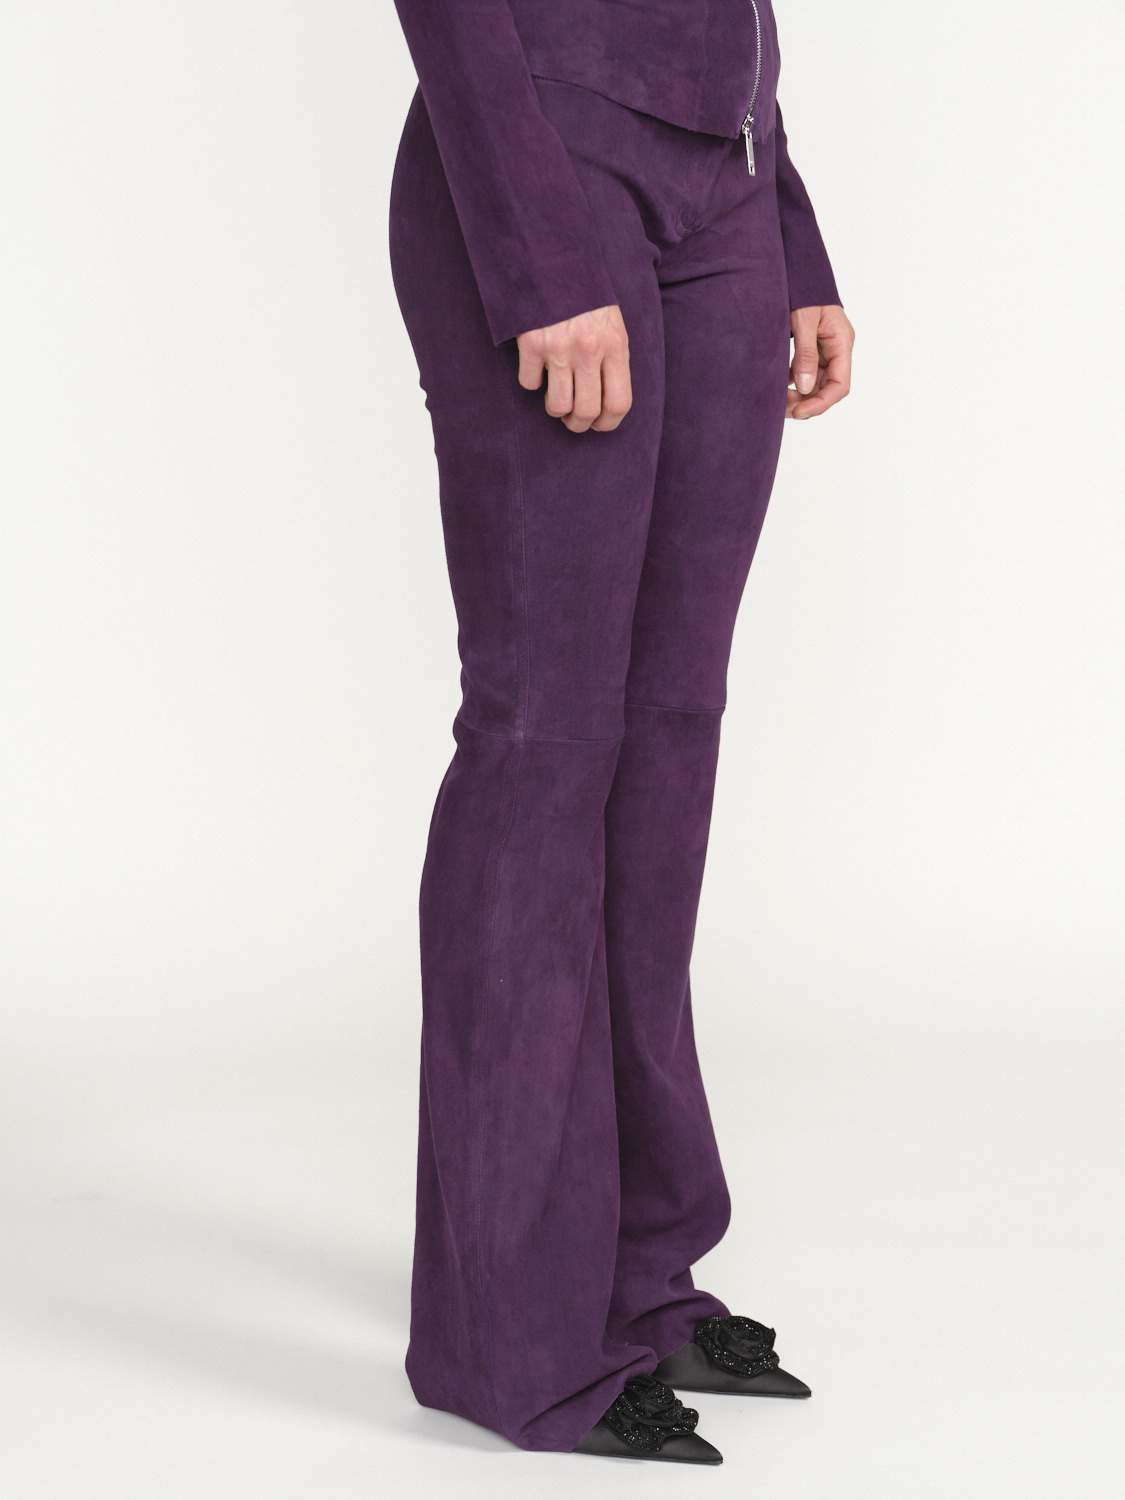 jitrois Pantalon Pika - Bootcuts in suede leather purple 40